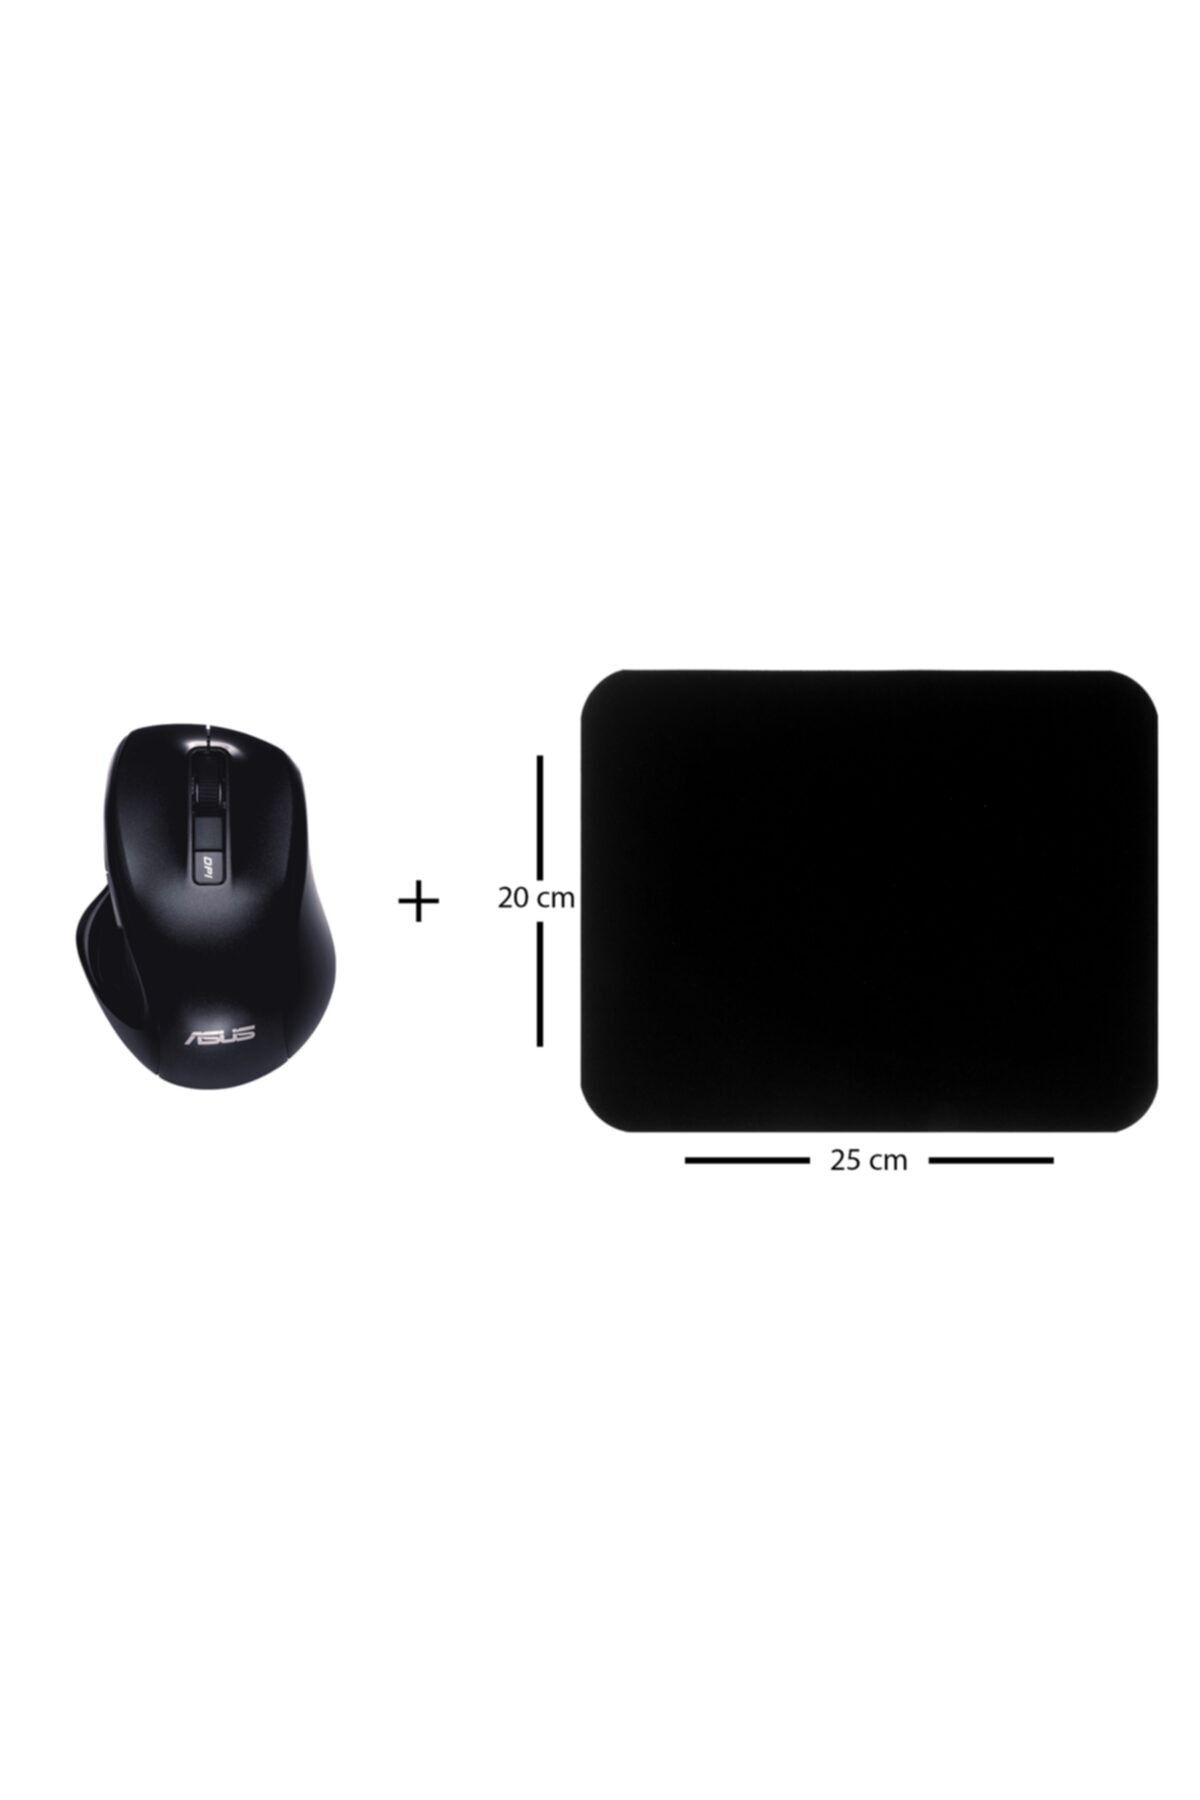 ASUS Mw202 Kablosuz Optic Sessiz Gece Mavisi Mouse Mouse Pad